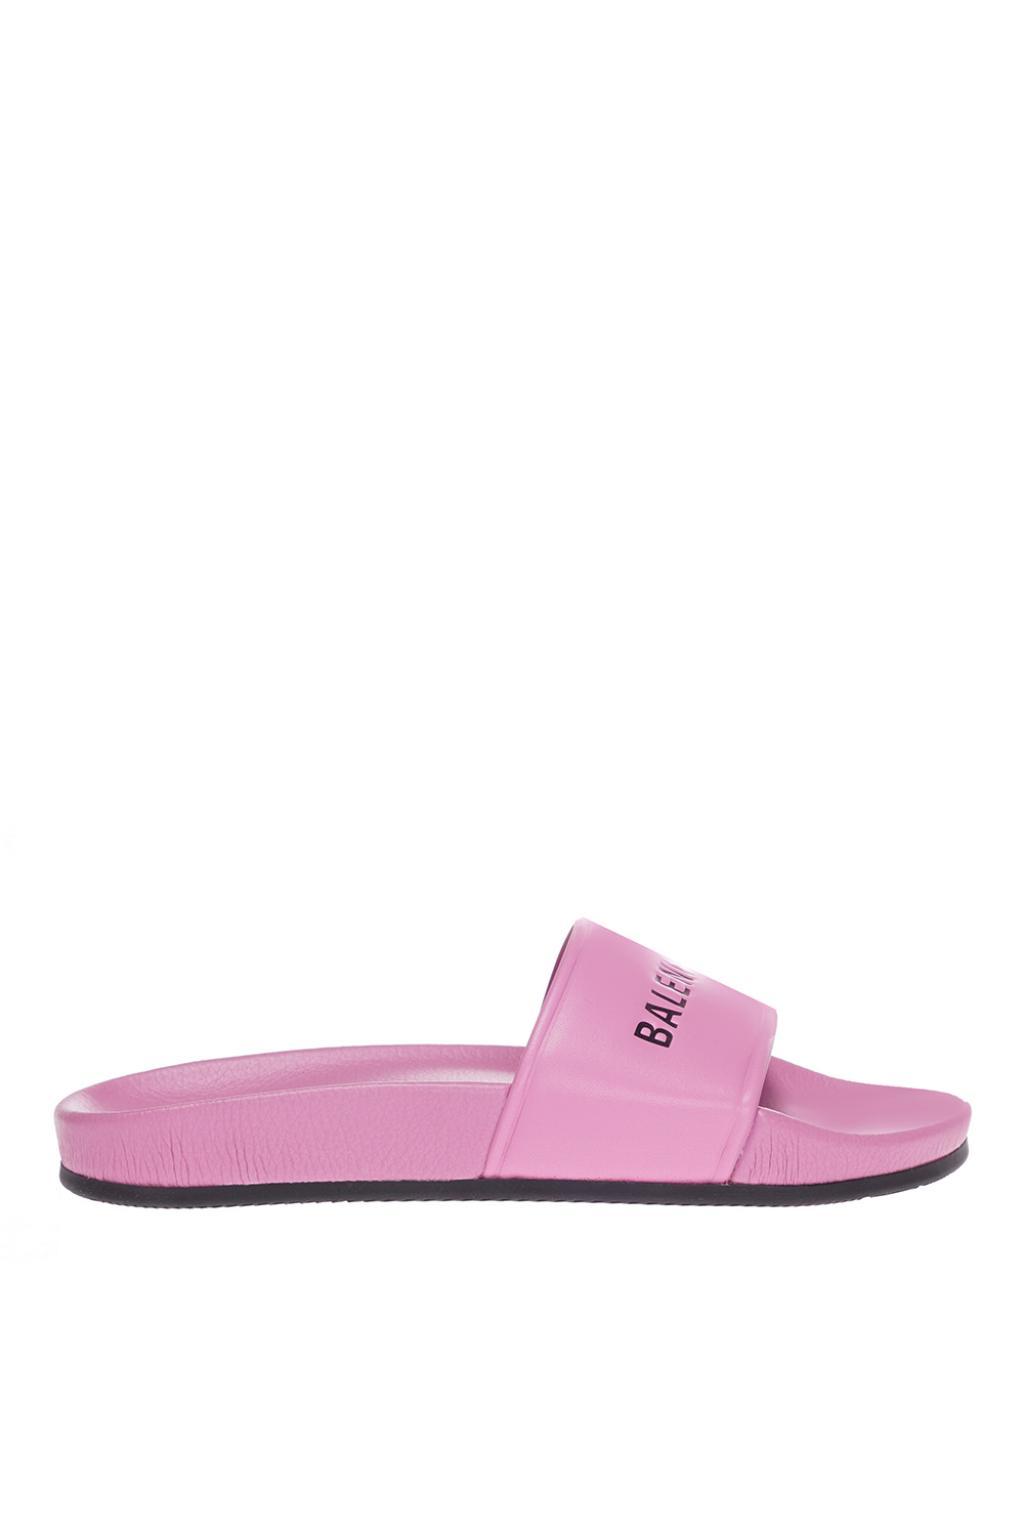 Balenciaga Logo Slides in Pink | Lyst